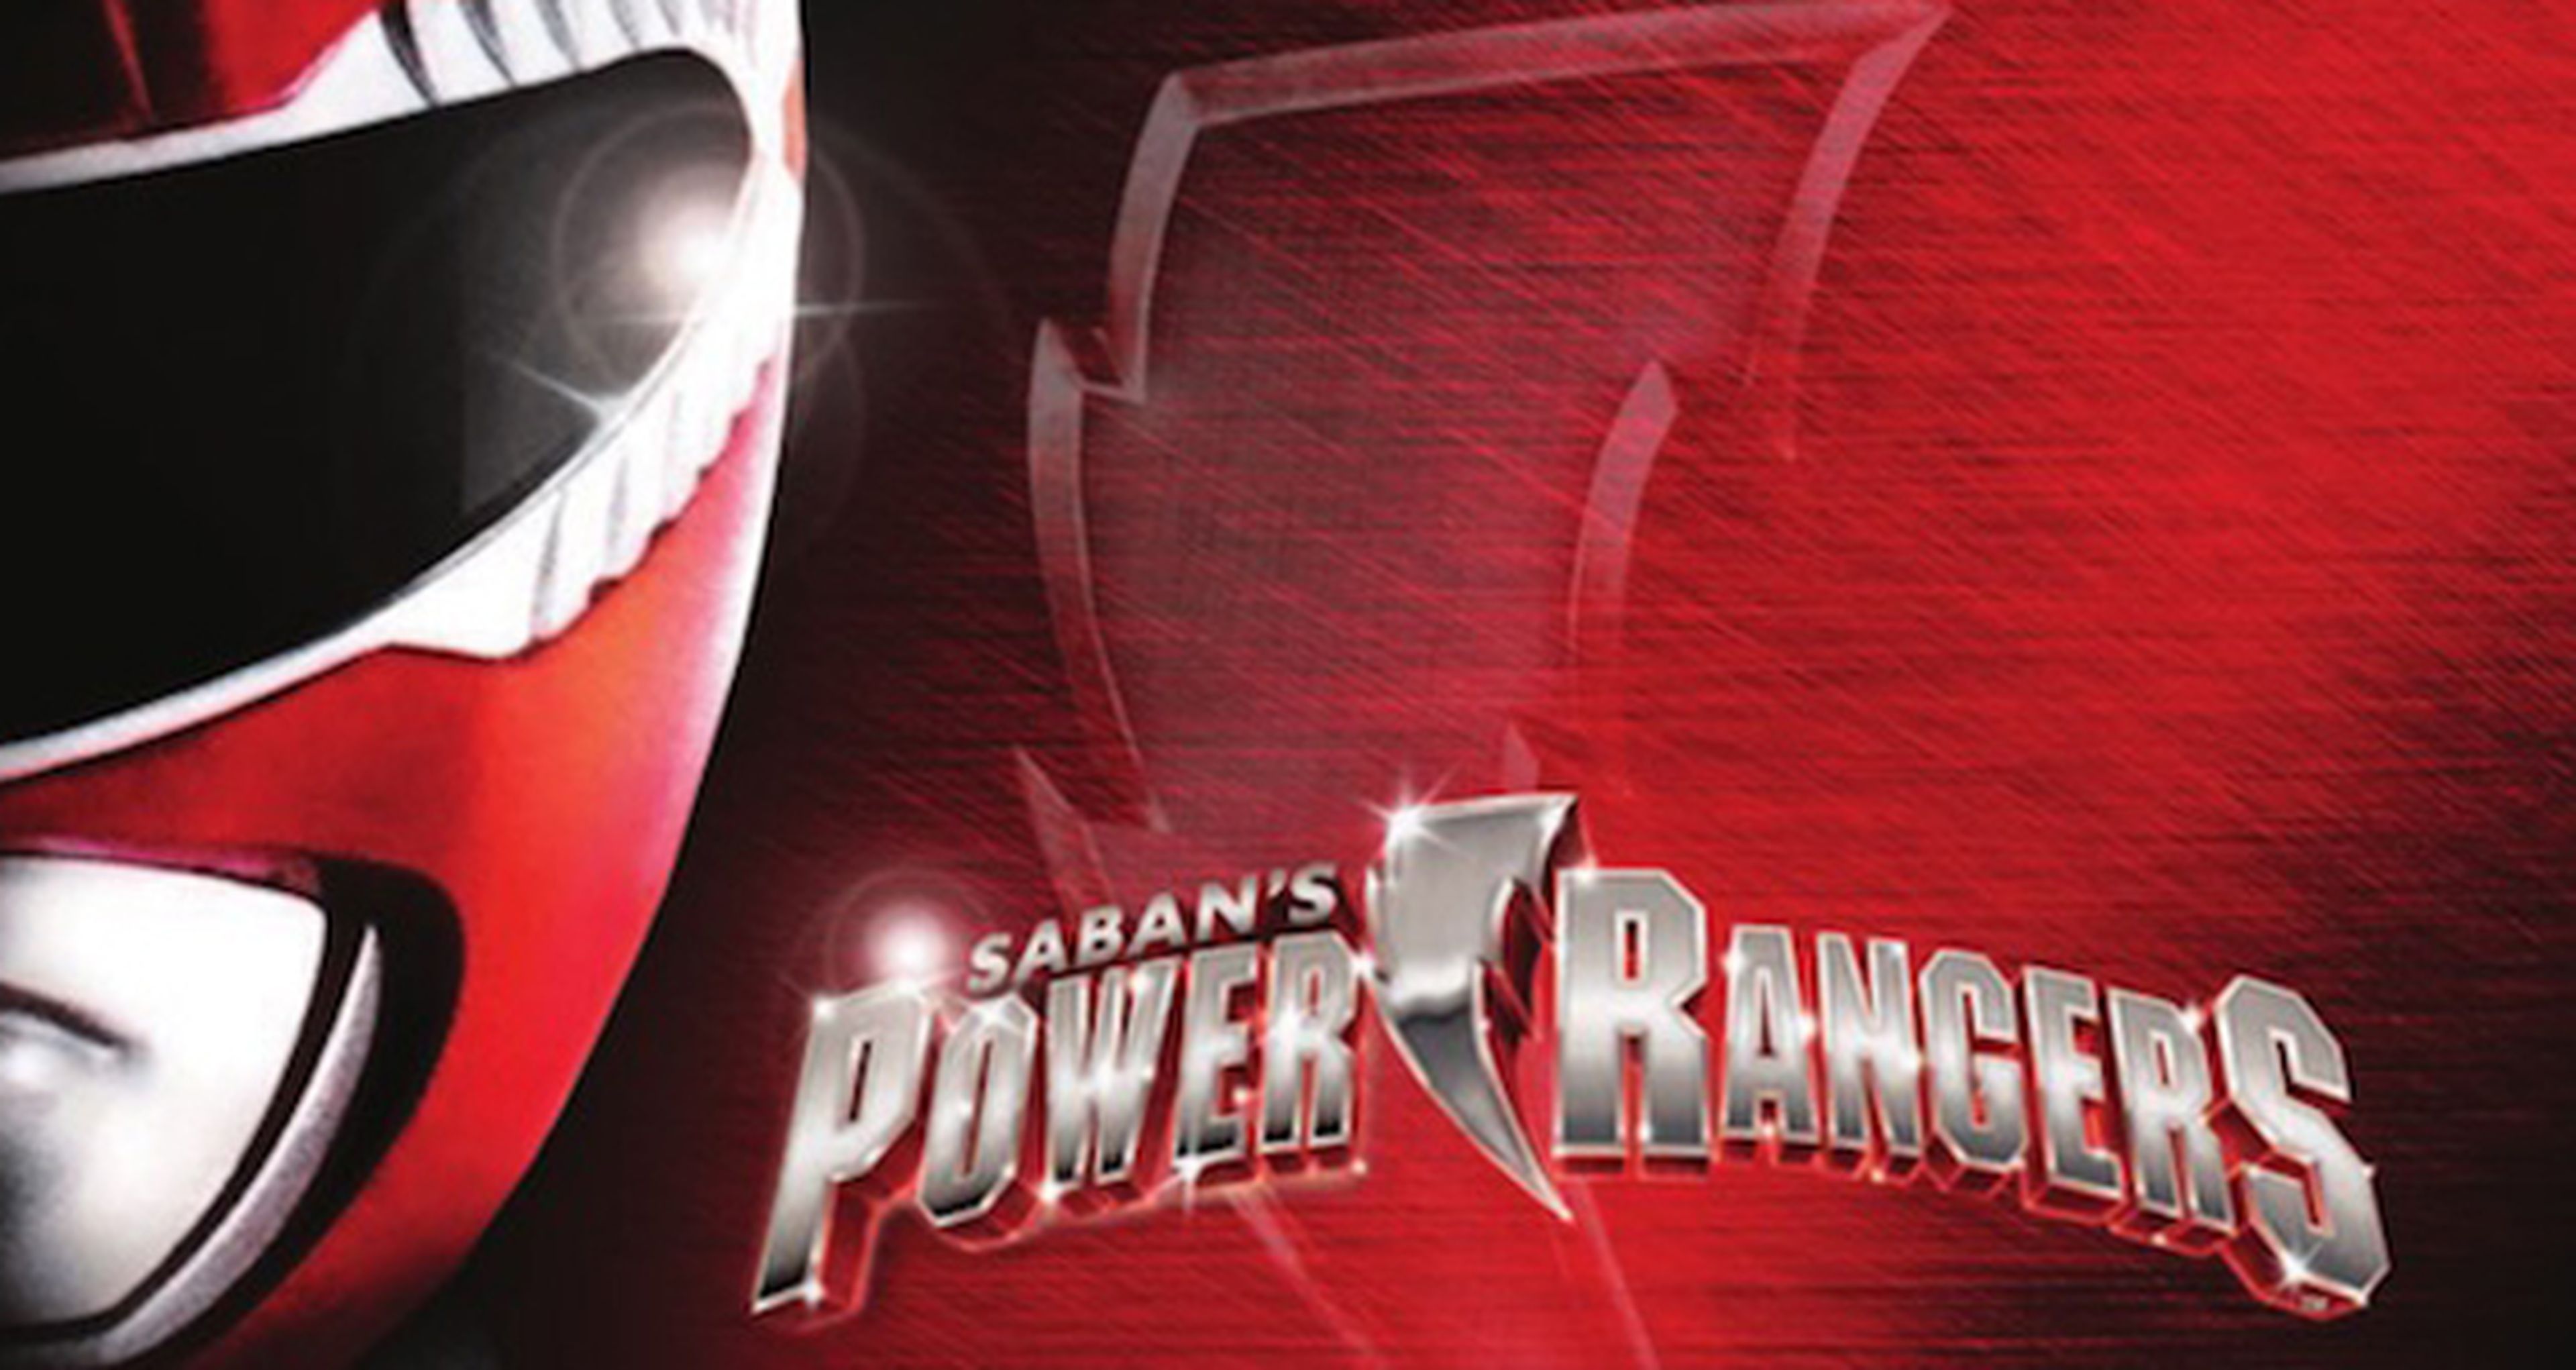 Power Rangers - sinopsis de la película, revelada